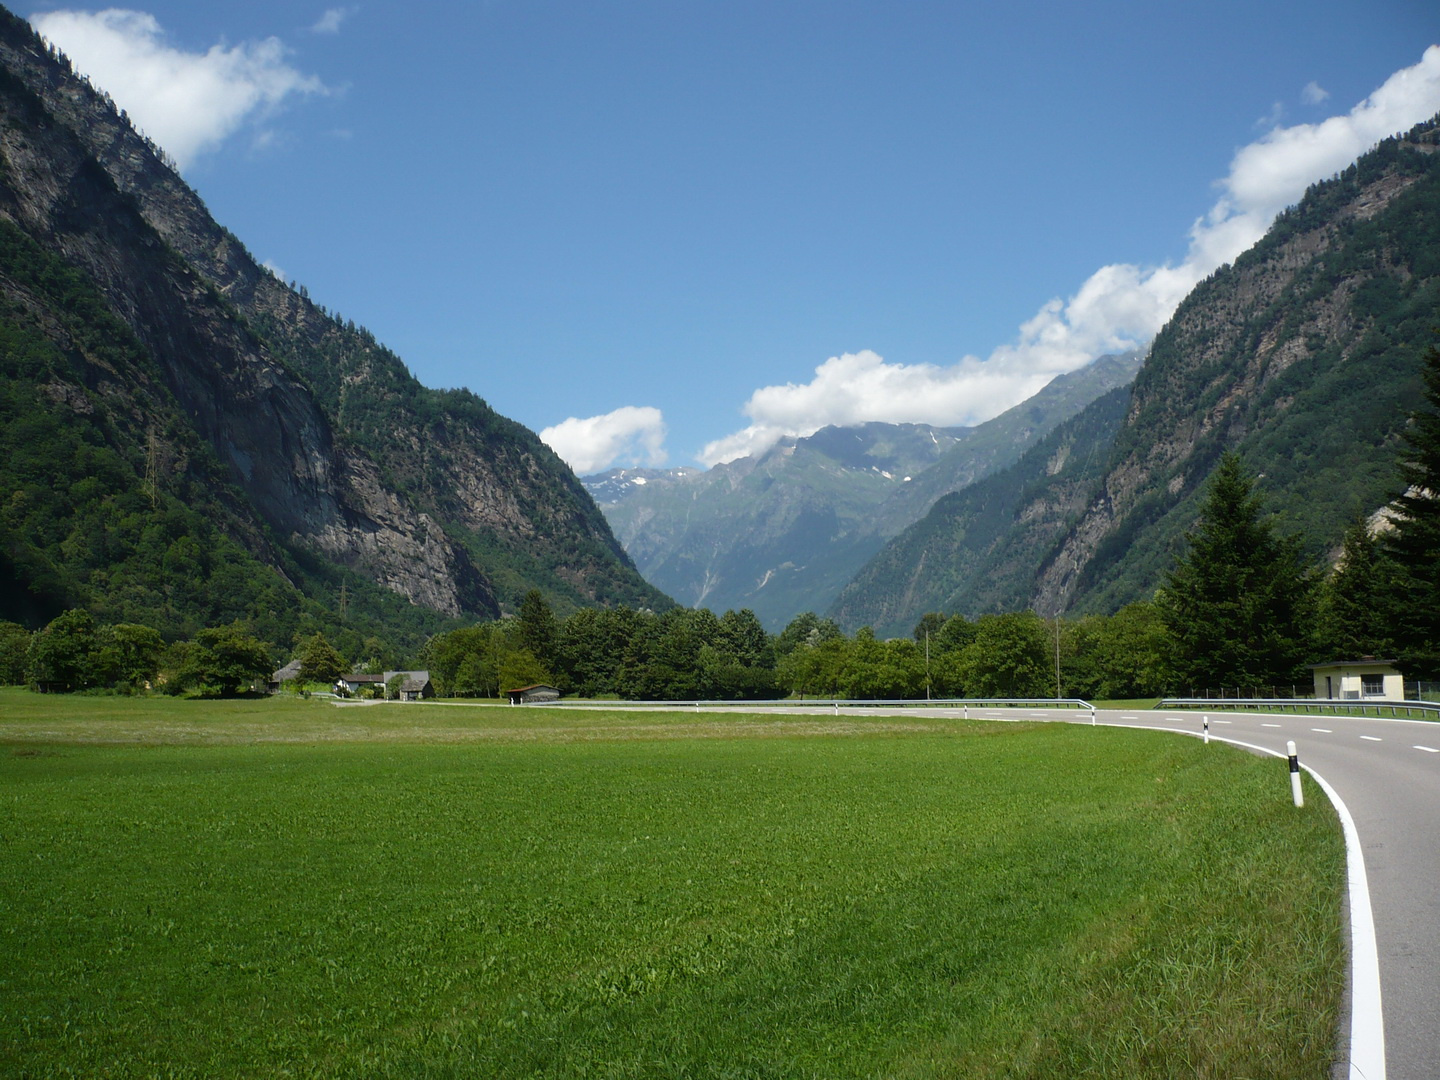 Ticino völgye